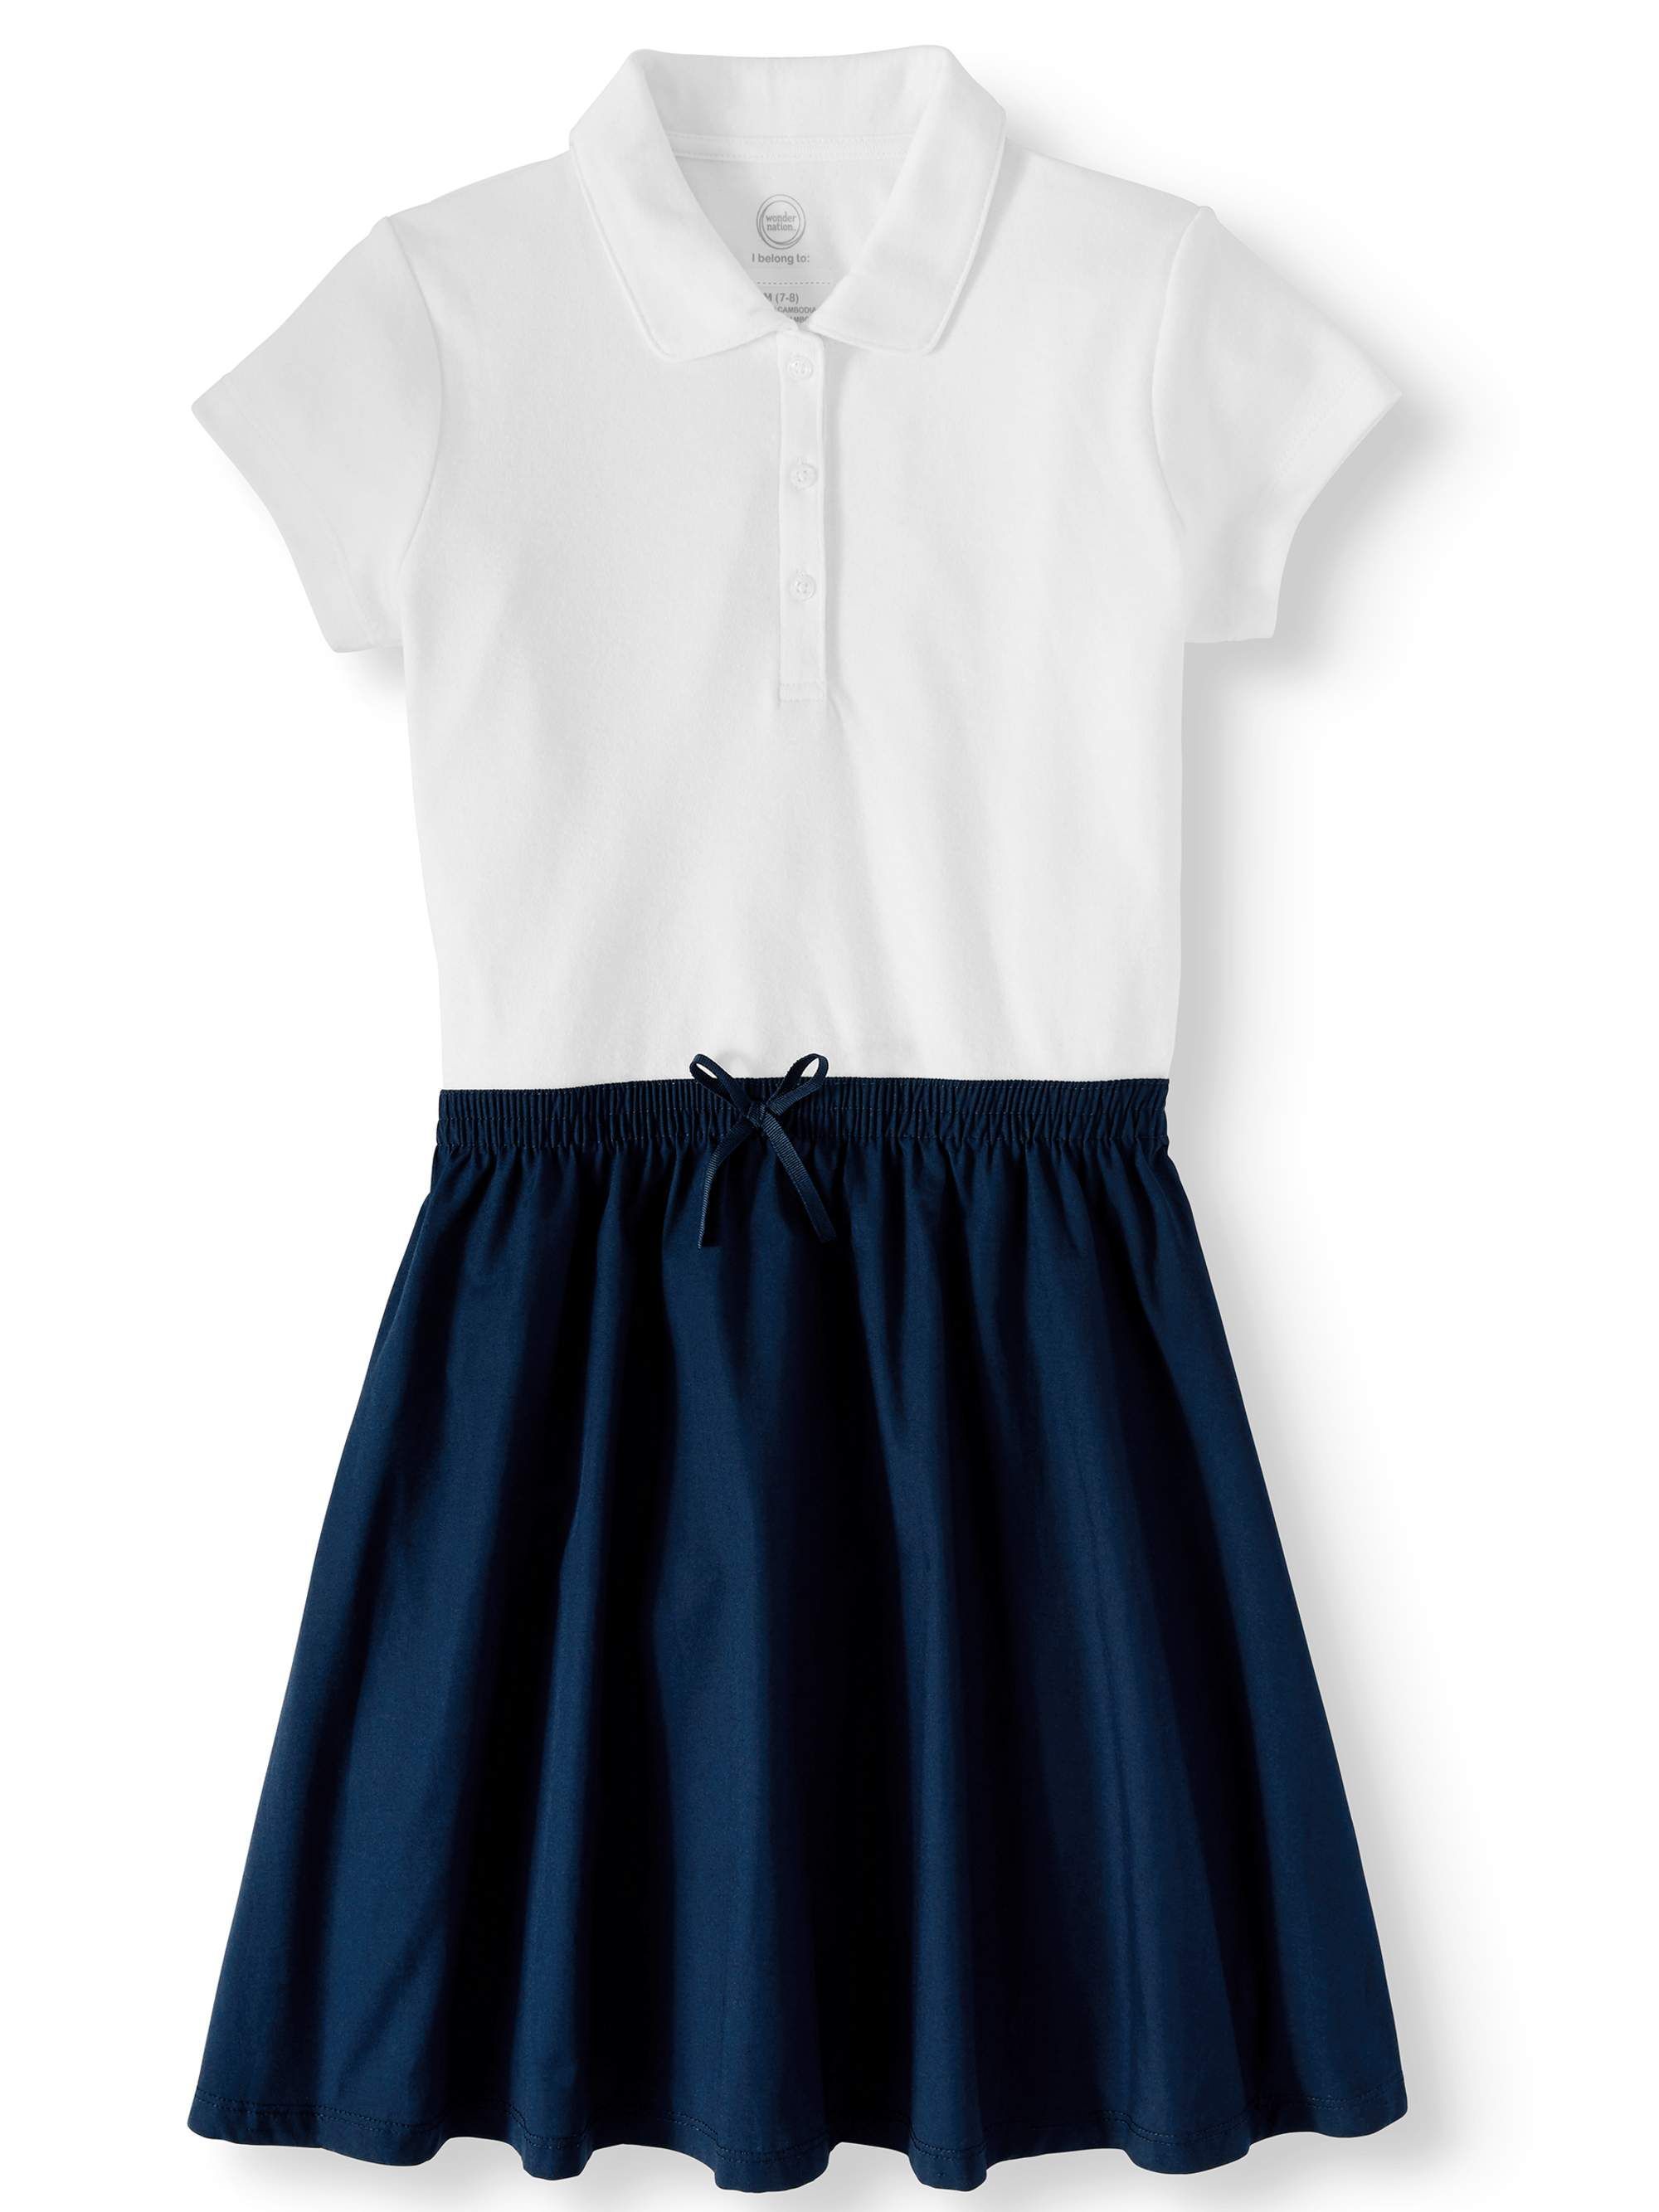 13 style School uniform ideas